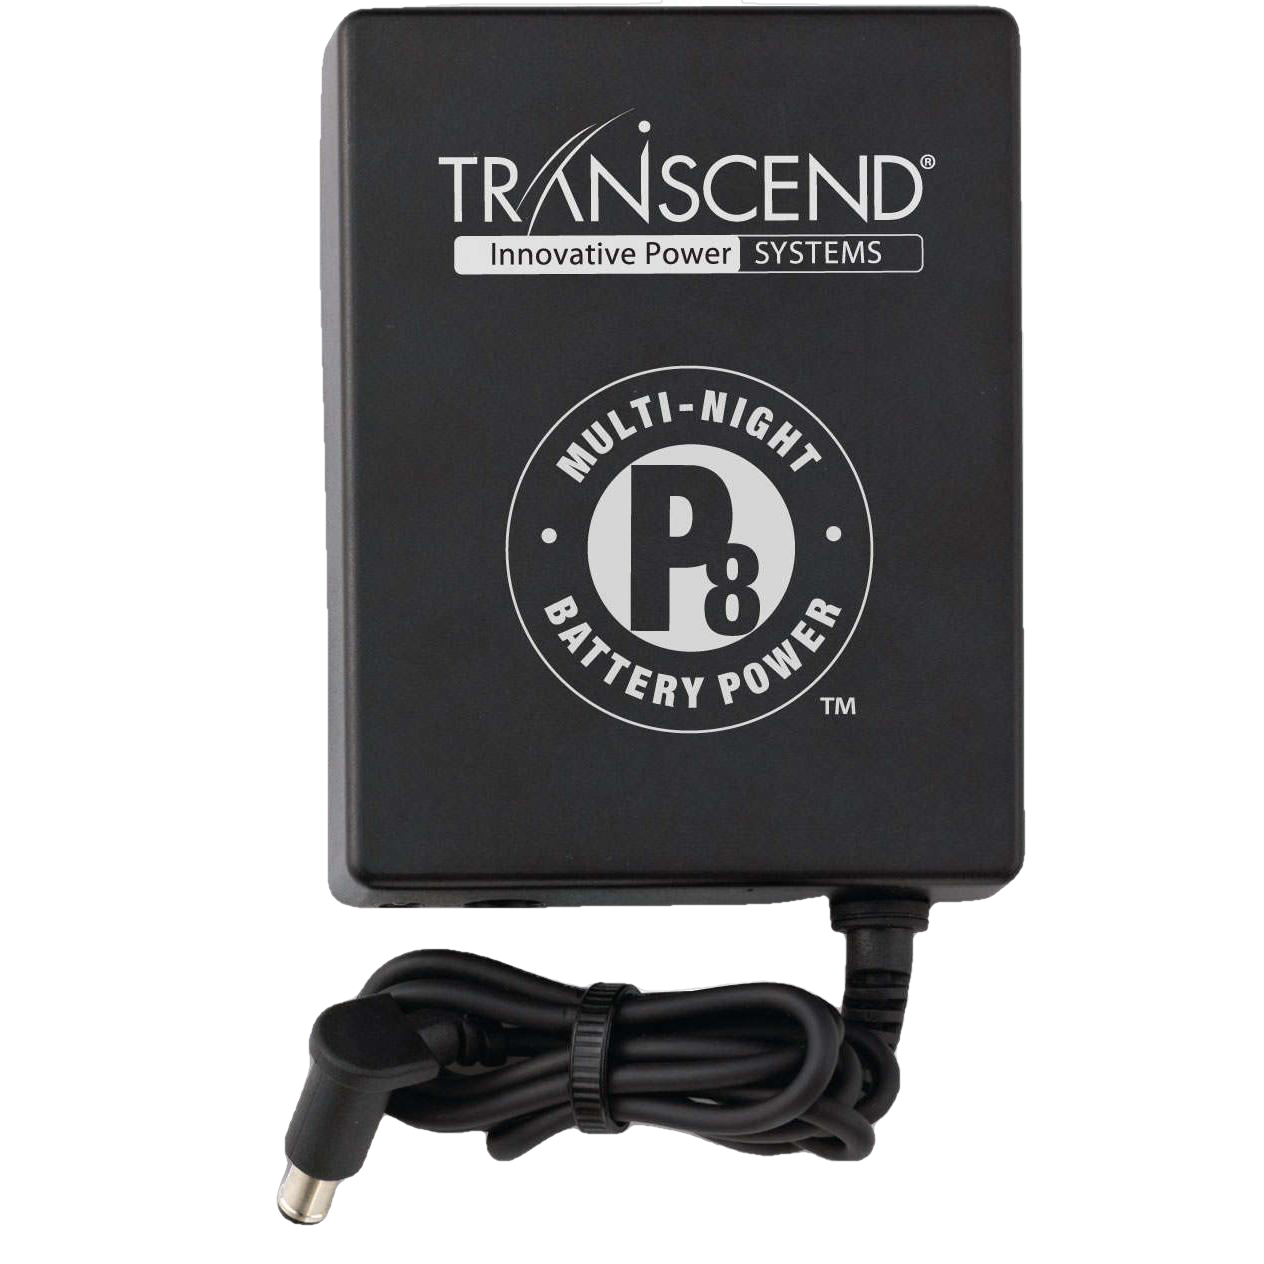 Somnetics, Transcend P8 Multi-Night Travel CPAP Battery New